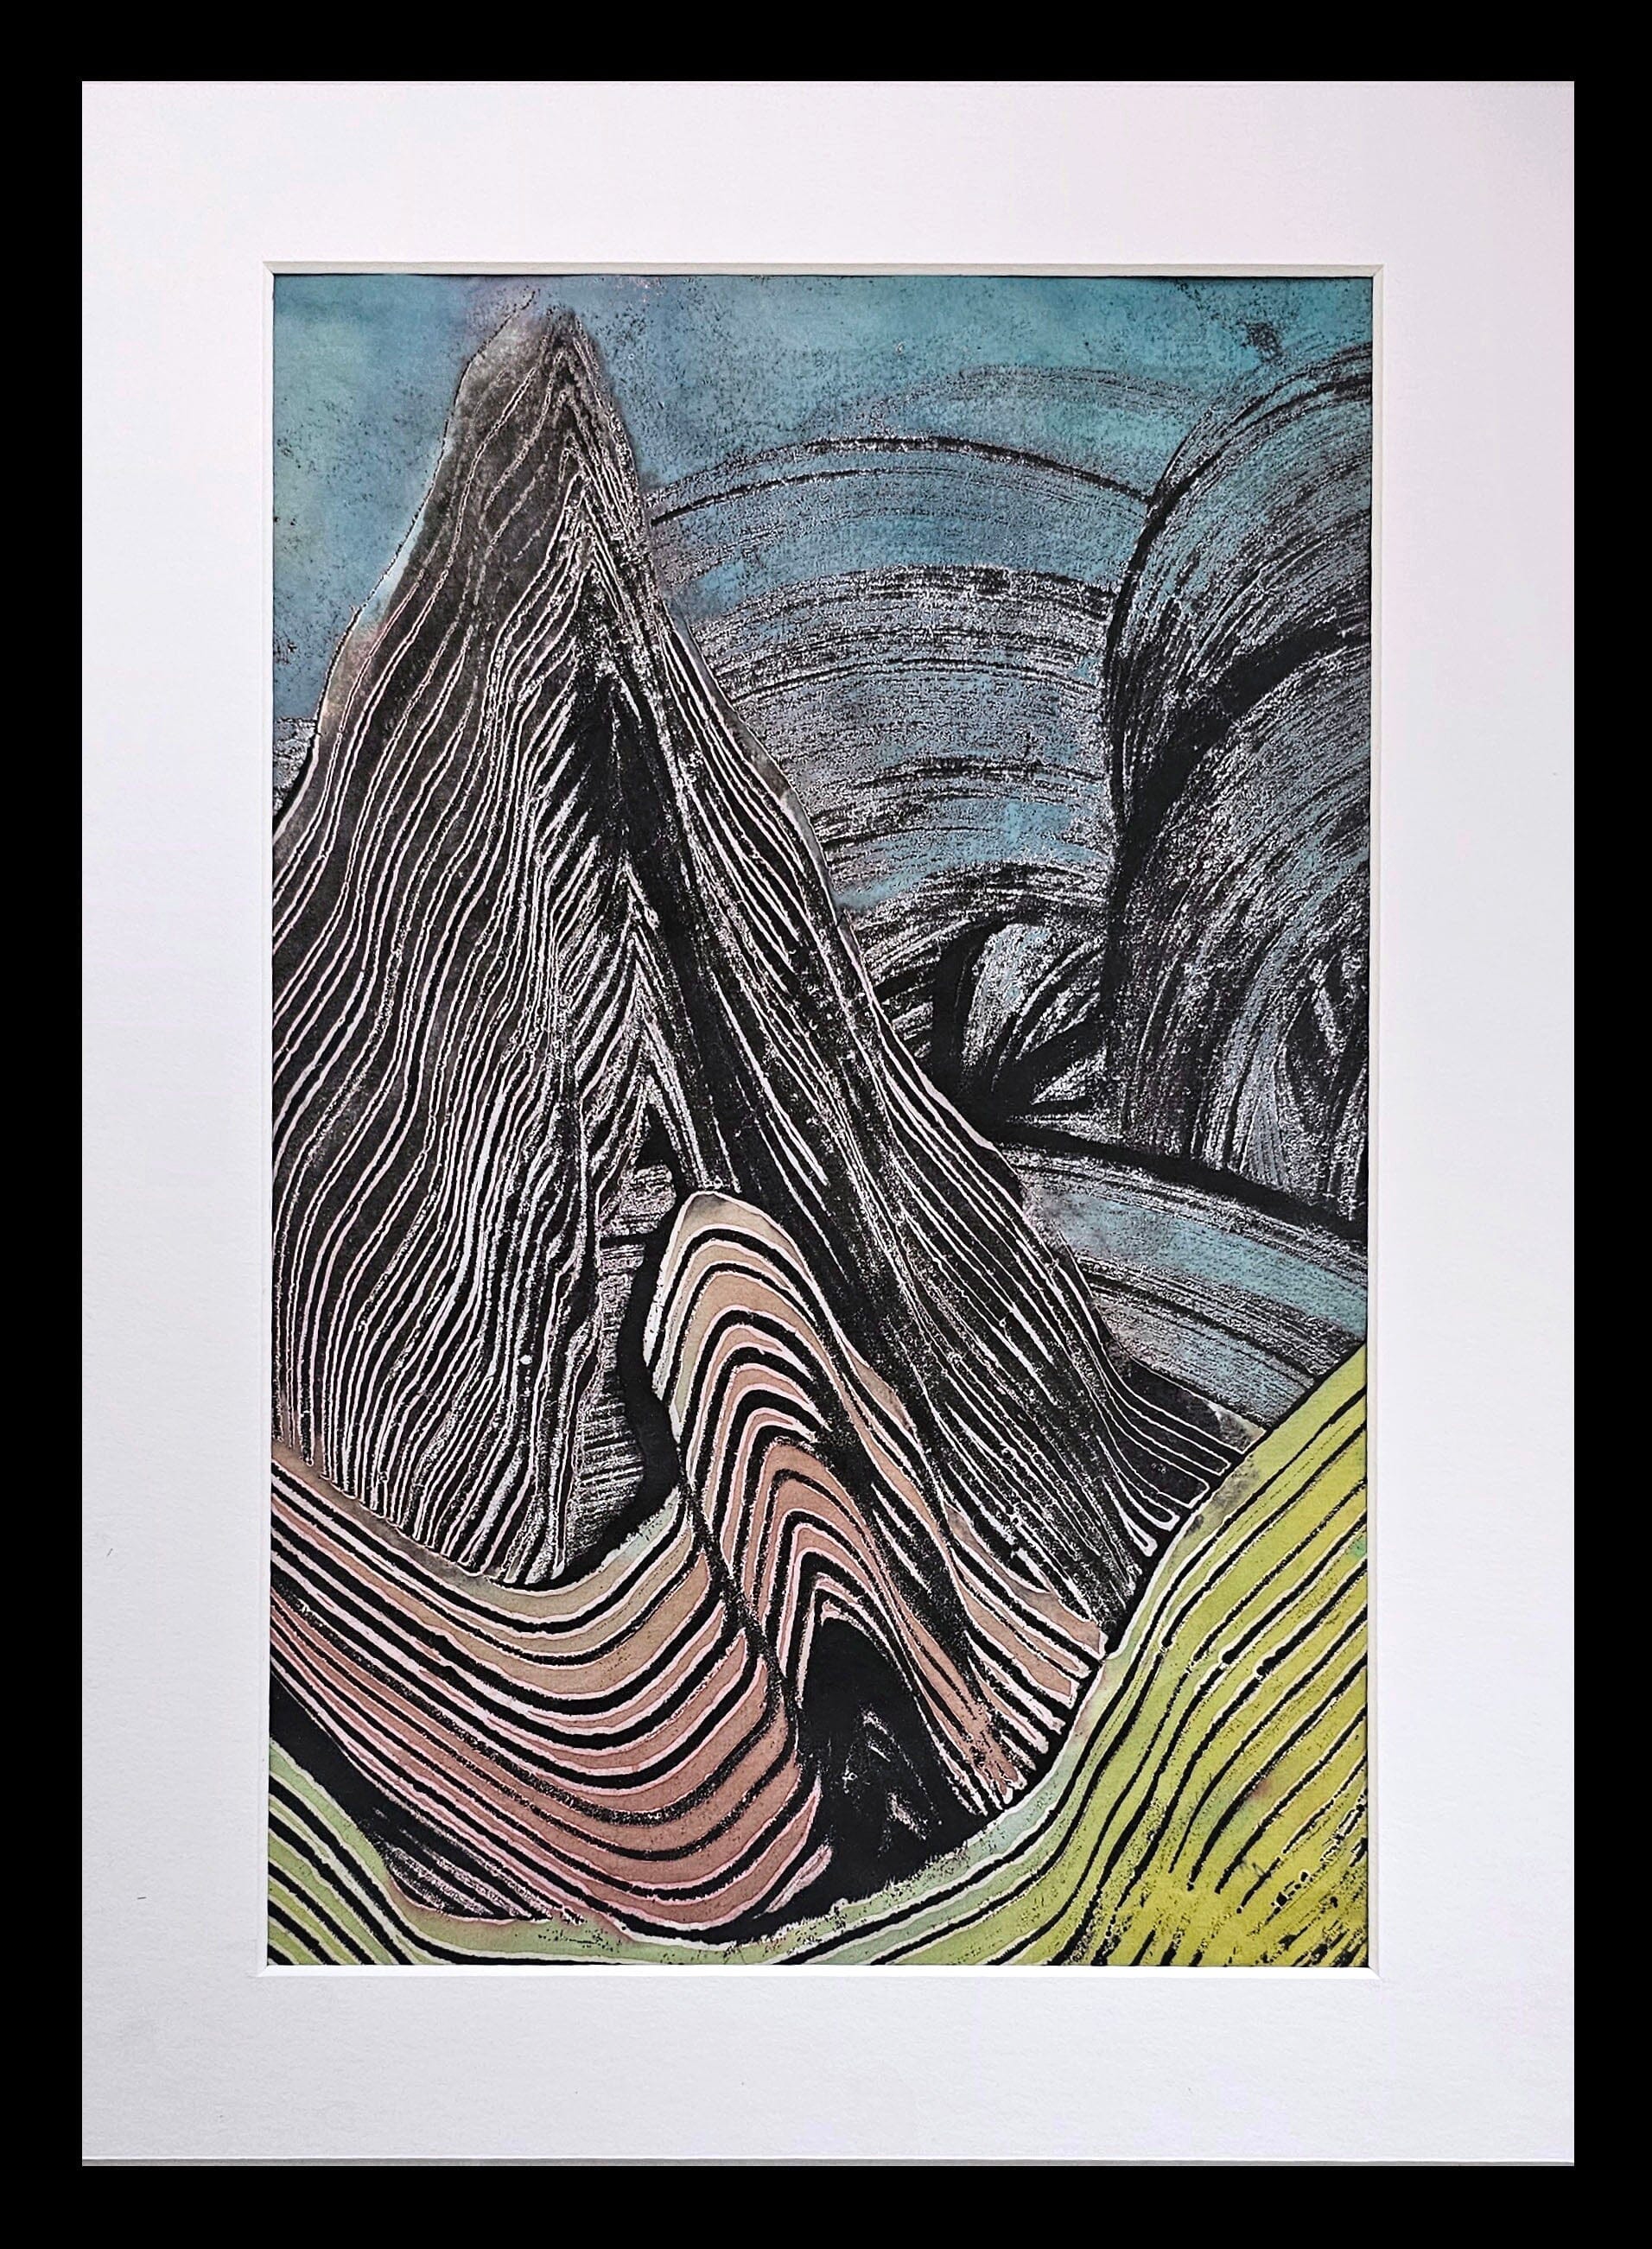 11X14" Diptych Encaustic Monotype - "Valley Whispers" Artwork Elizabeth Schowachert Art